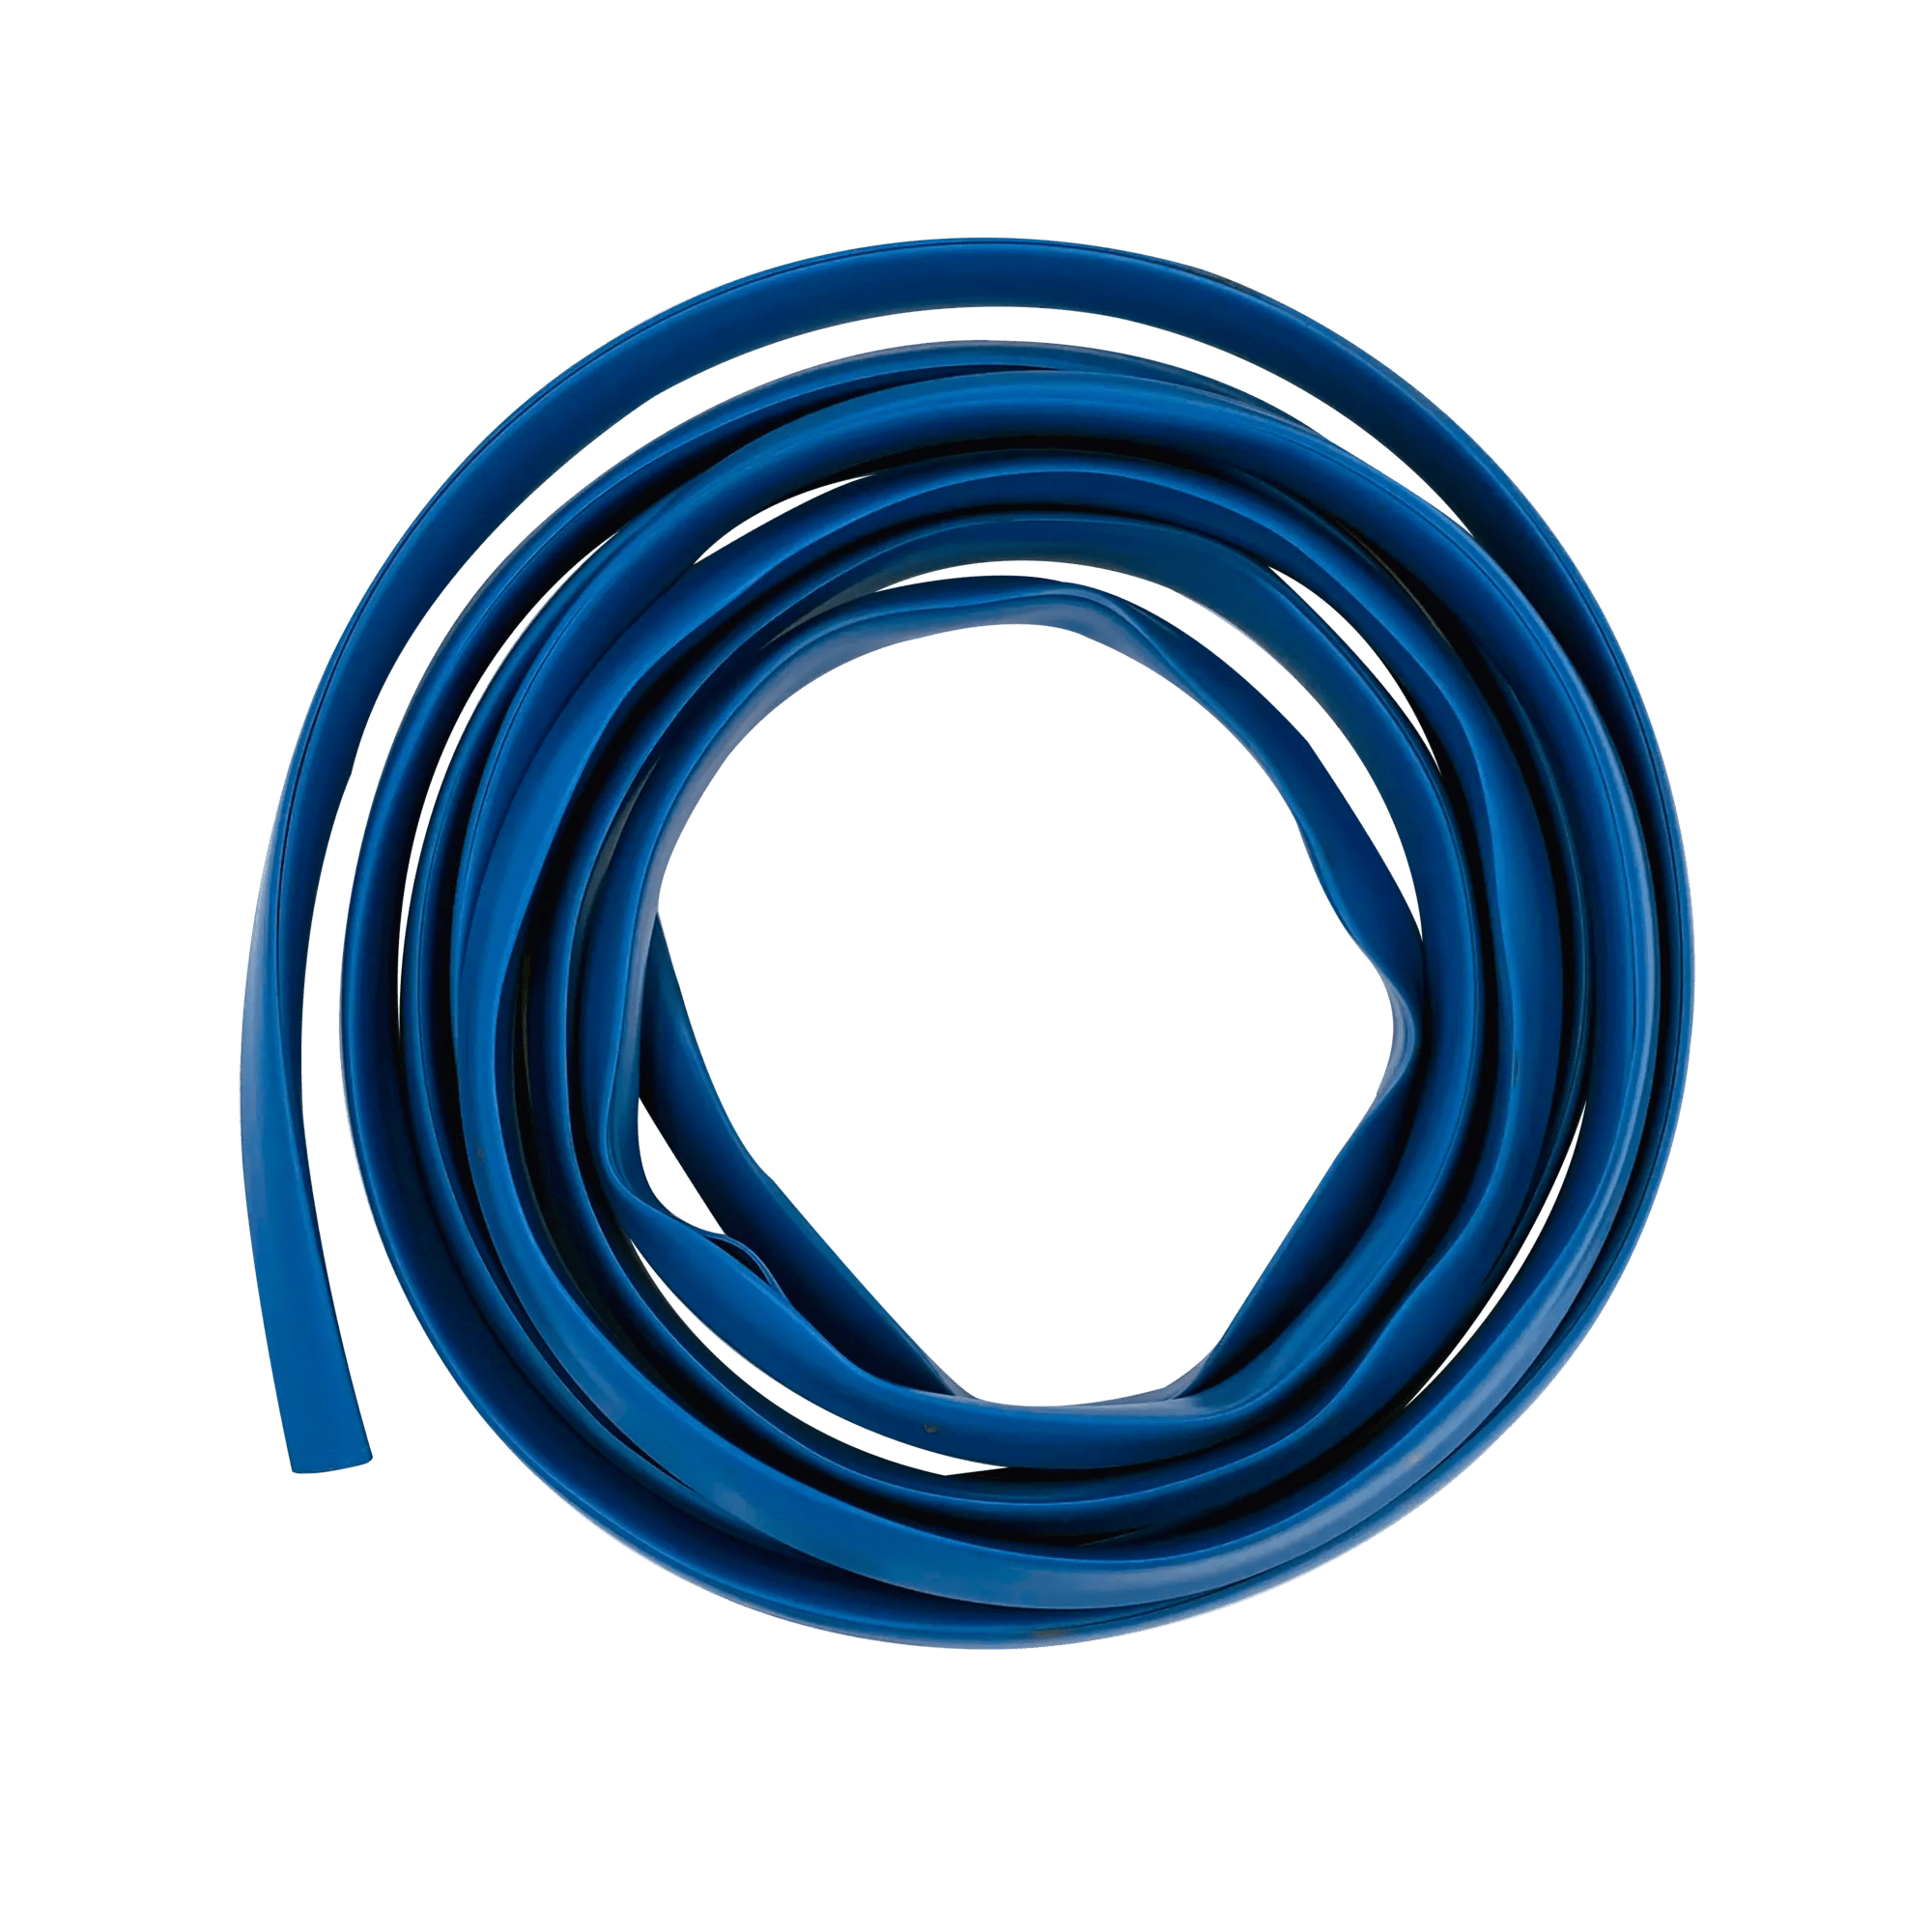 PELICAN - Contour Molding Kit in Azure Blue -  - PS0262-22 - TOP